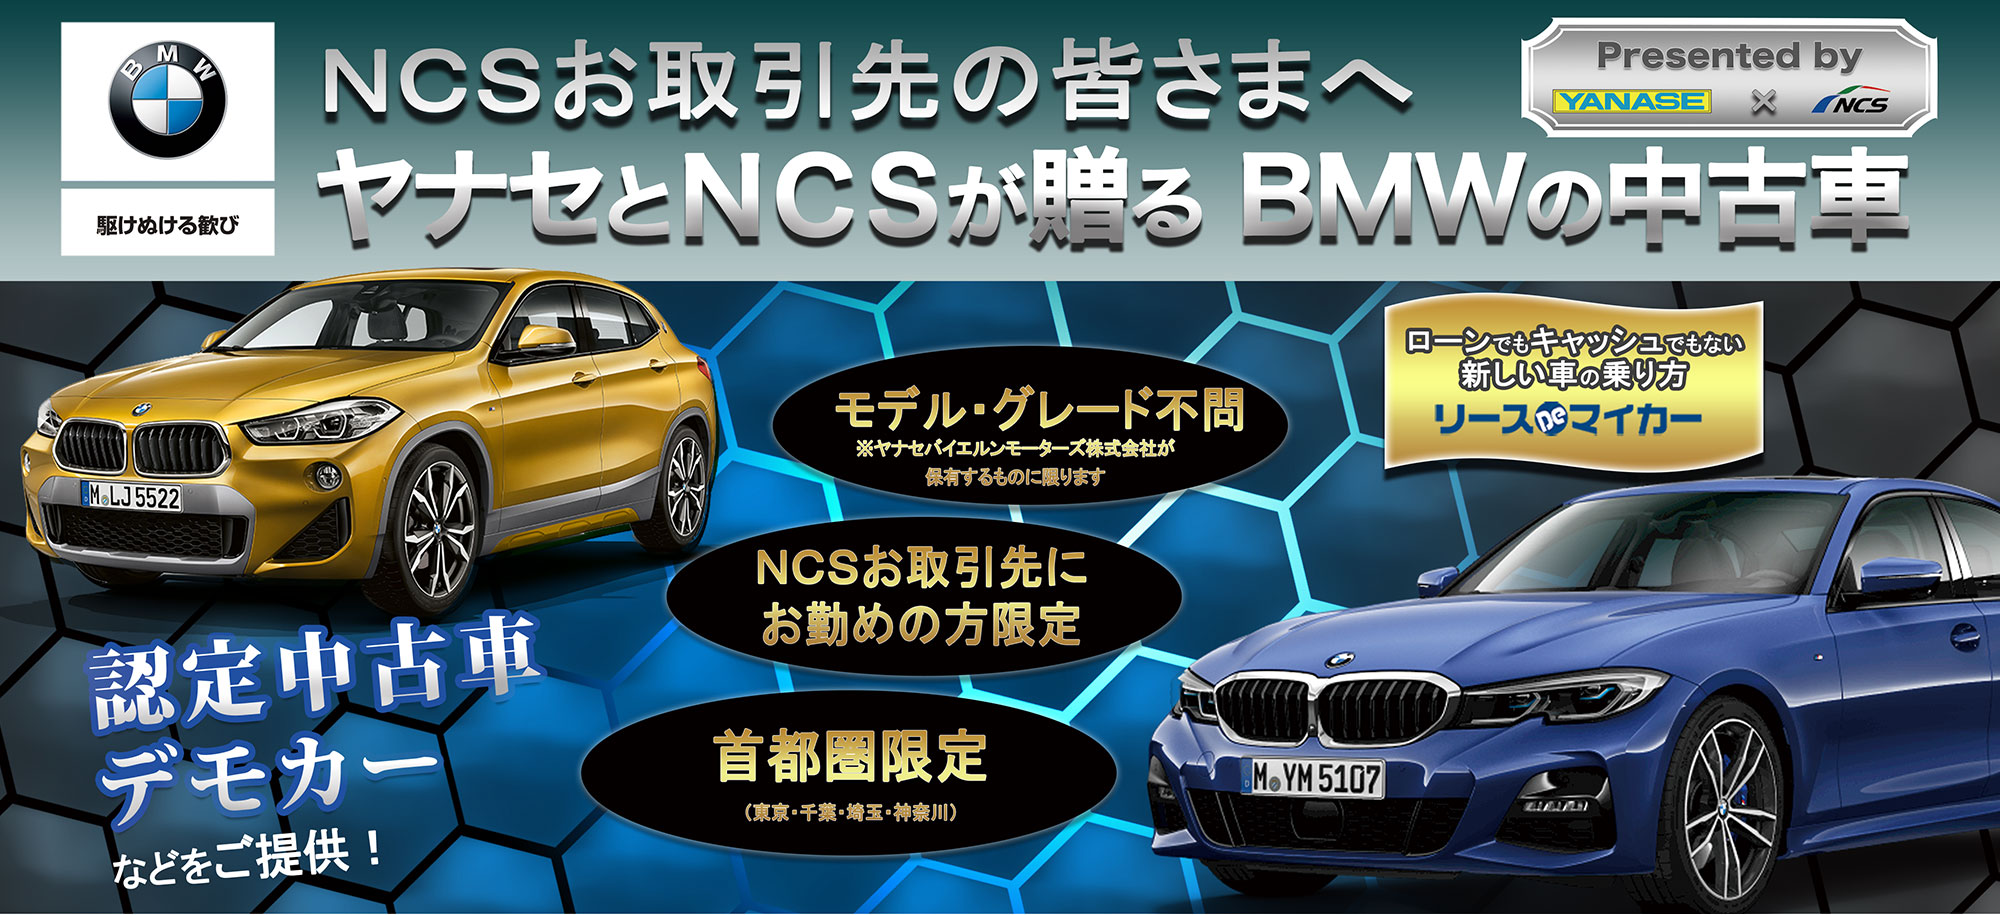 NCSお取引先の皆さまへ ヤナセとNCSが贈る BMWの中古車